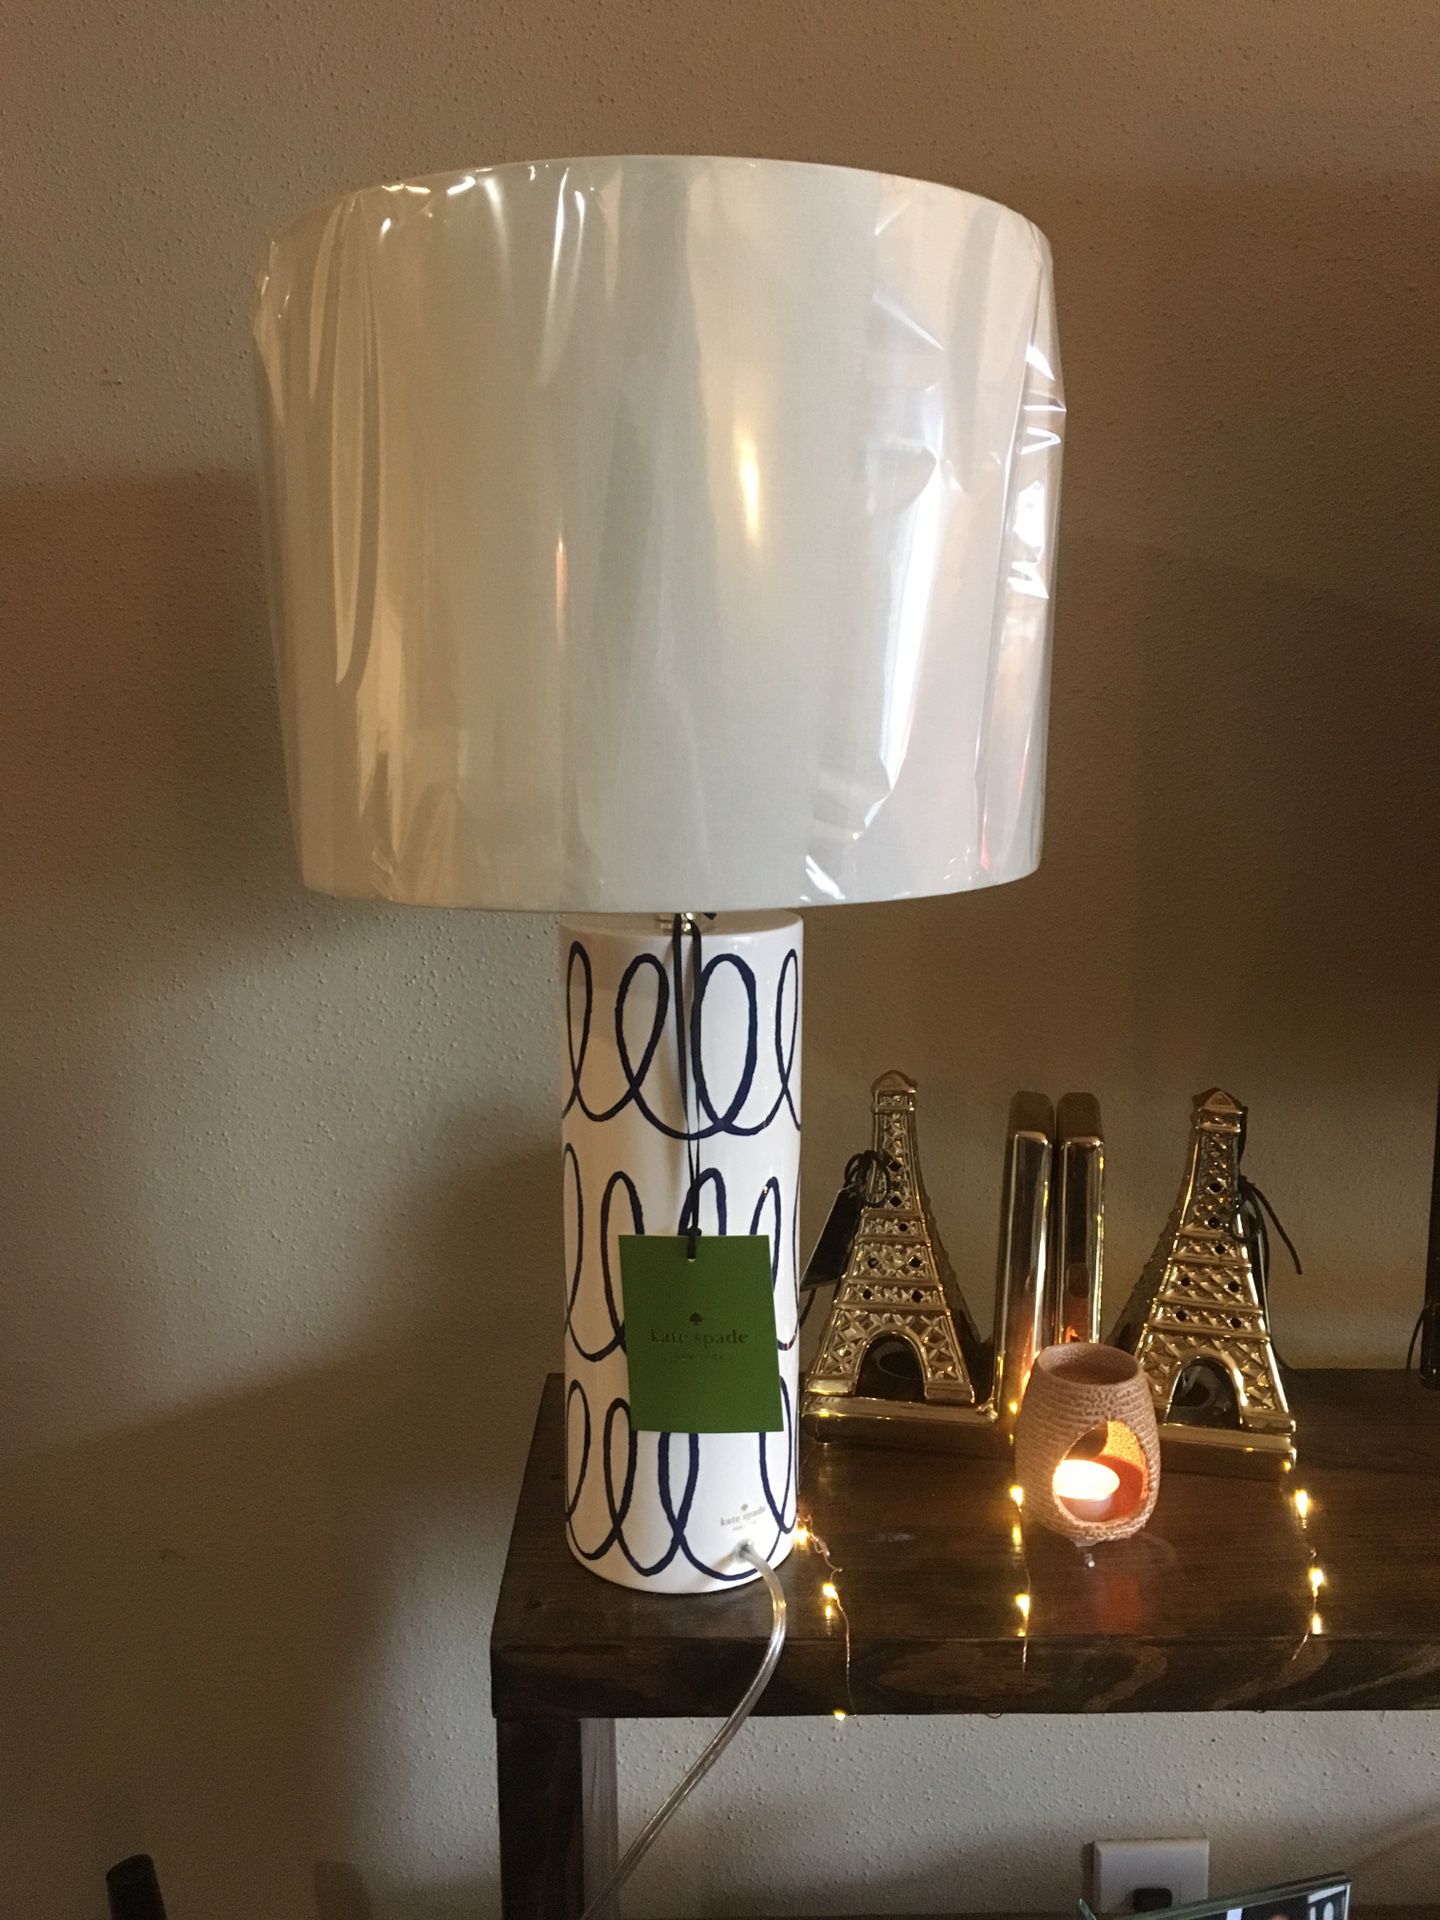 Kate Spade New York Charlotte Blue Lamp for Sale in Dunwoody, GA - OfferUp